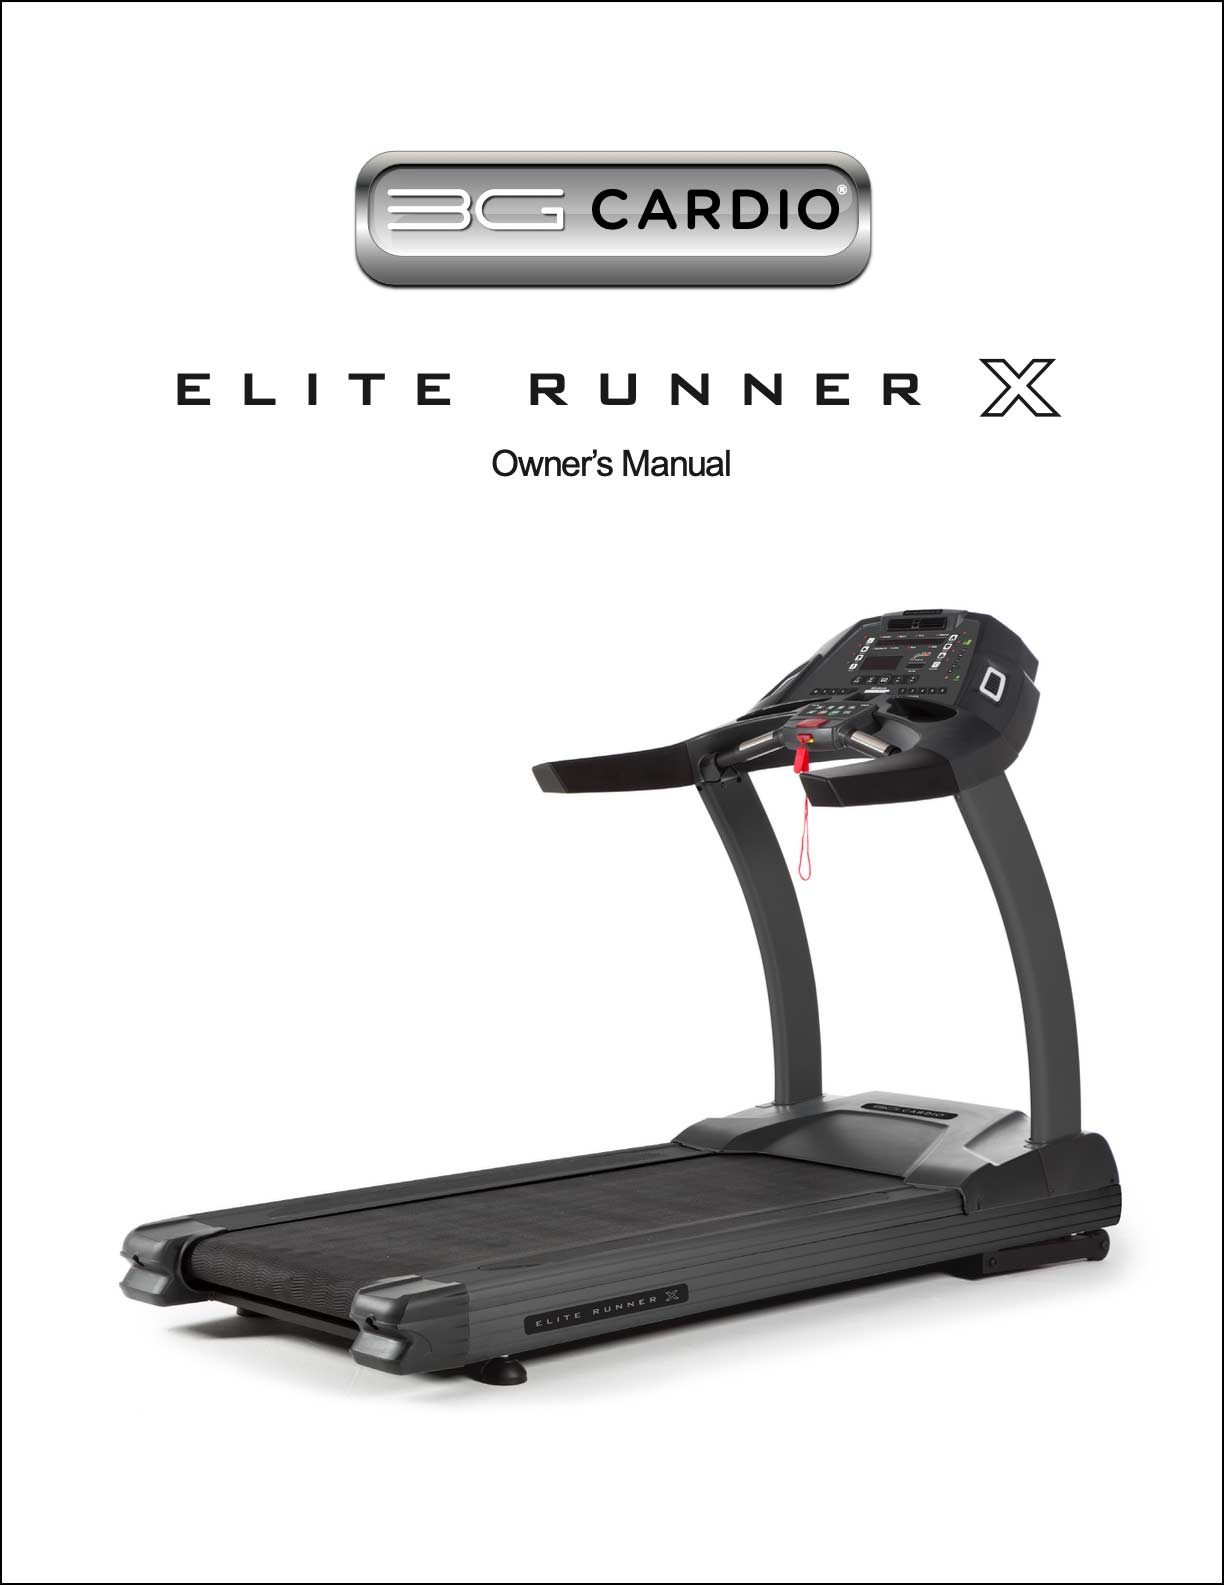 3G Cardio Elite Runner X Treadmill Manual